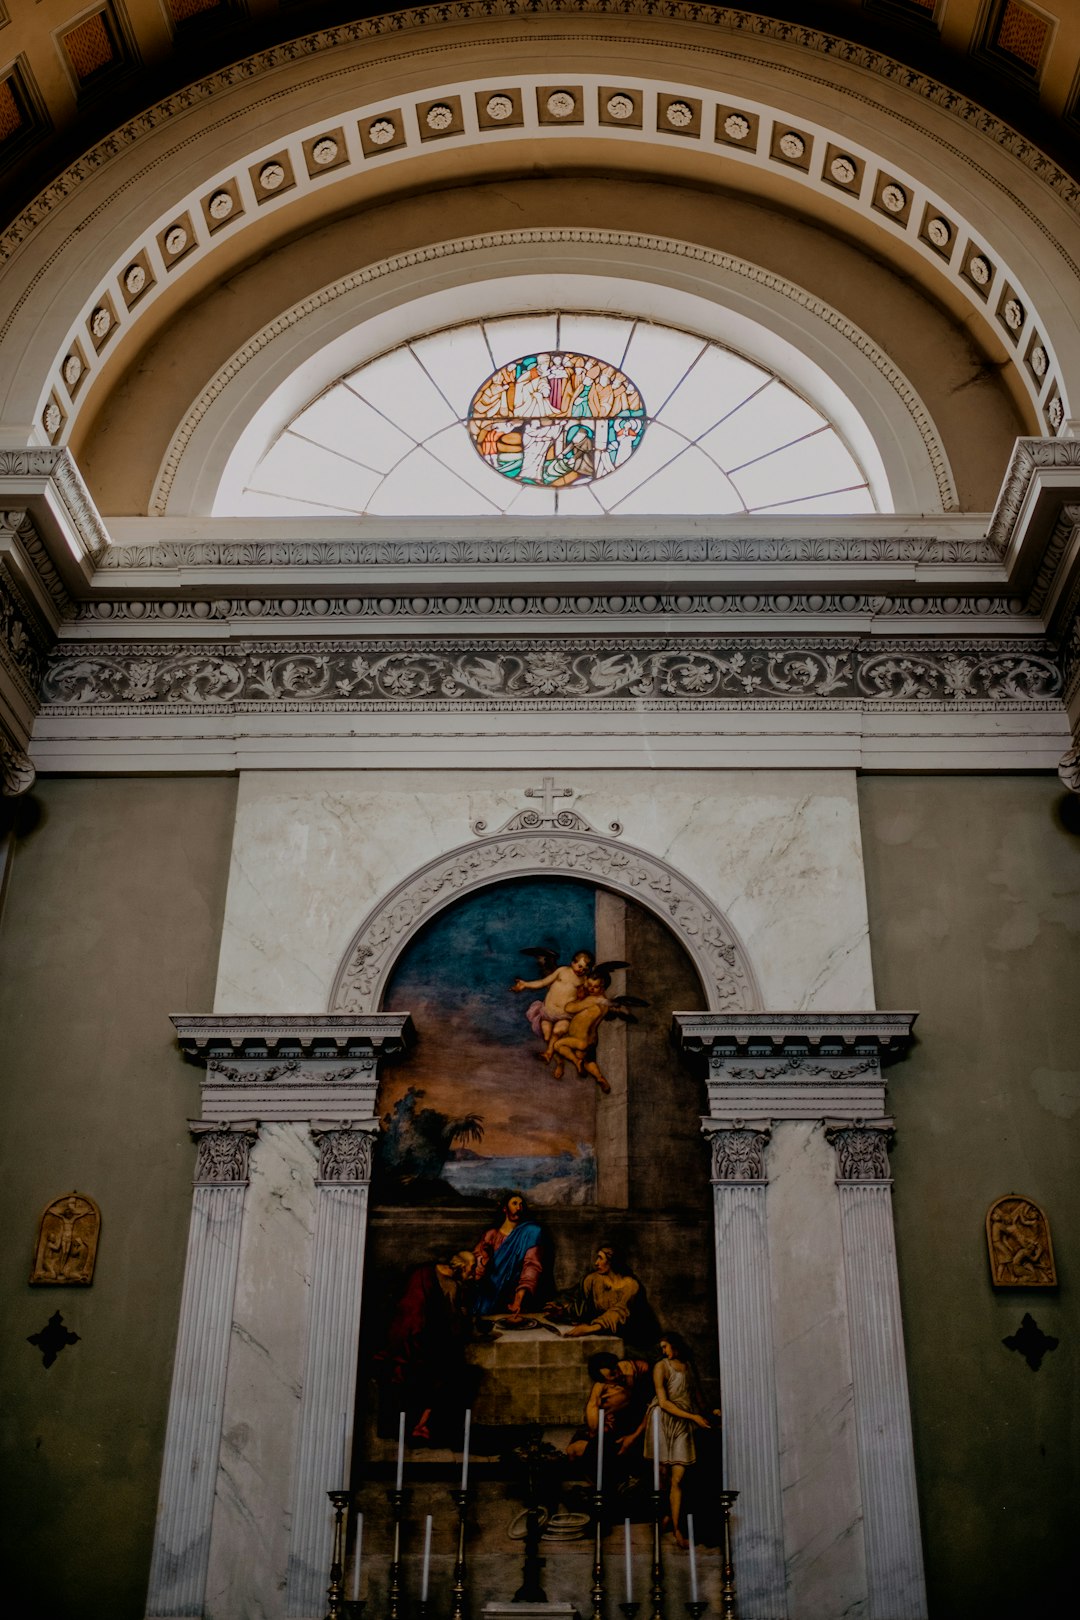 Basilica interior